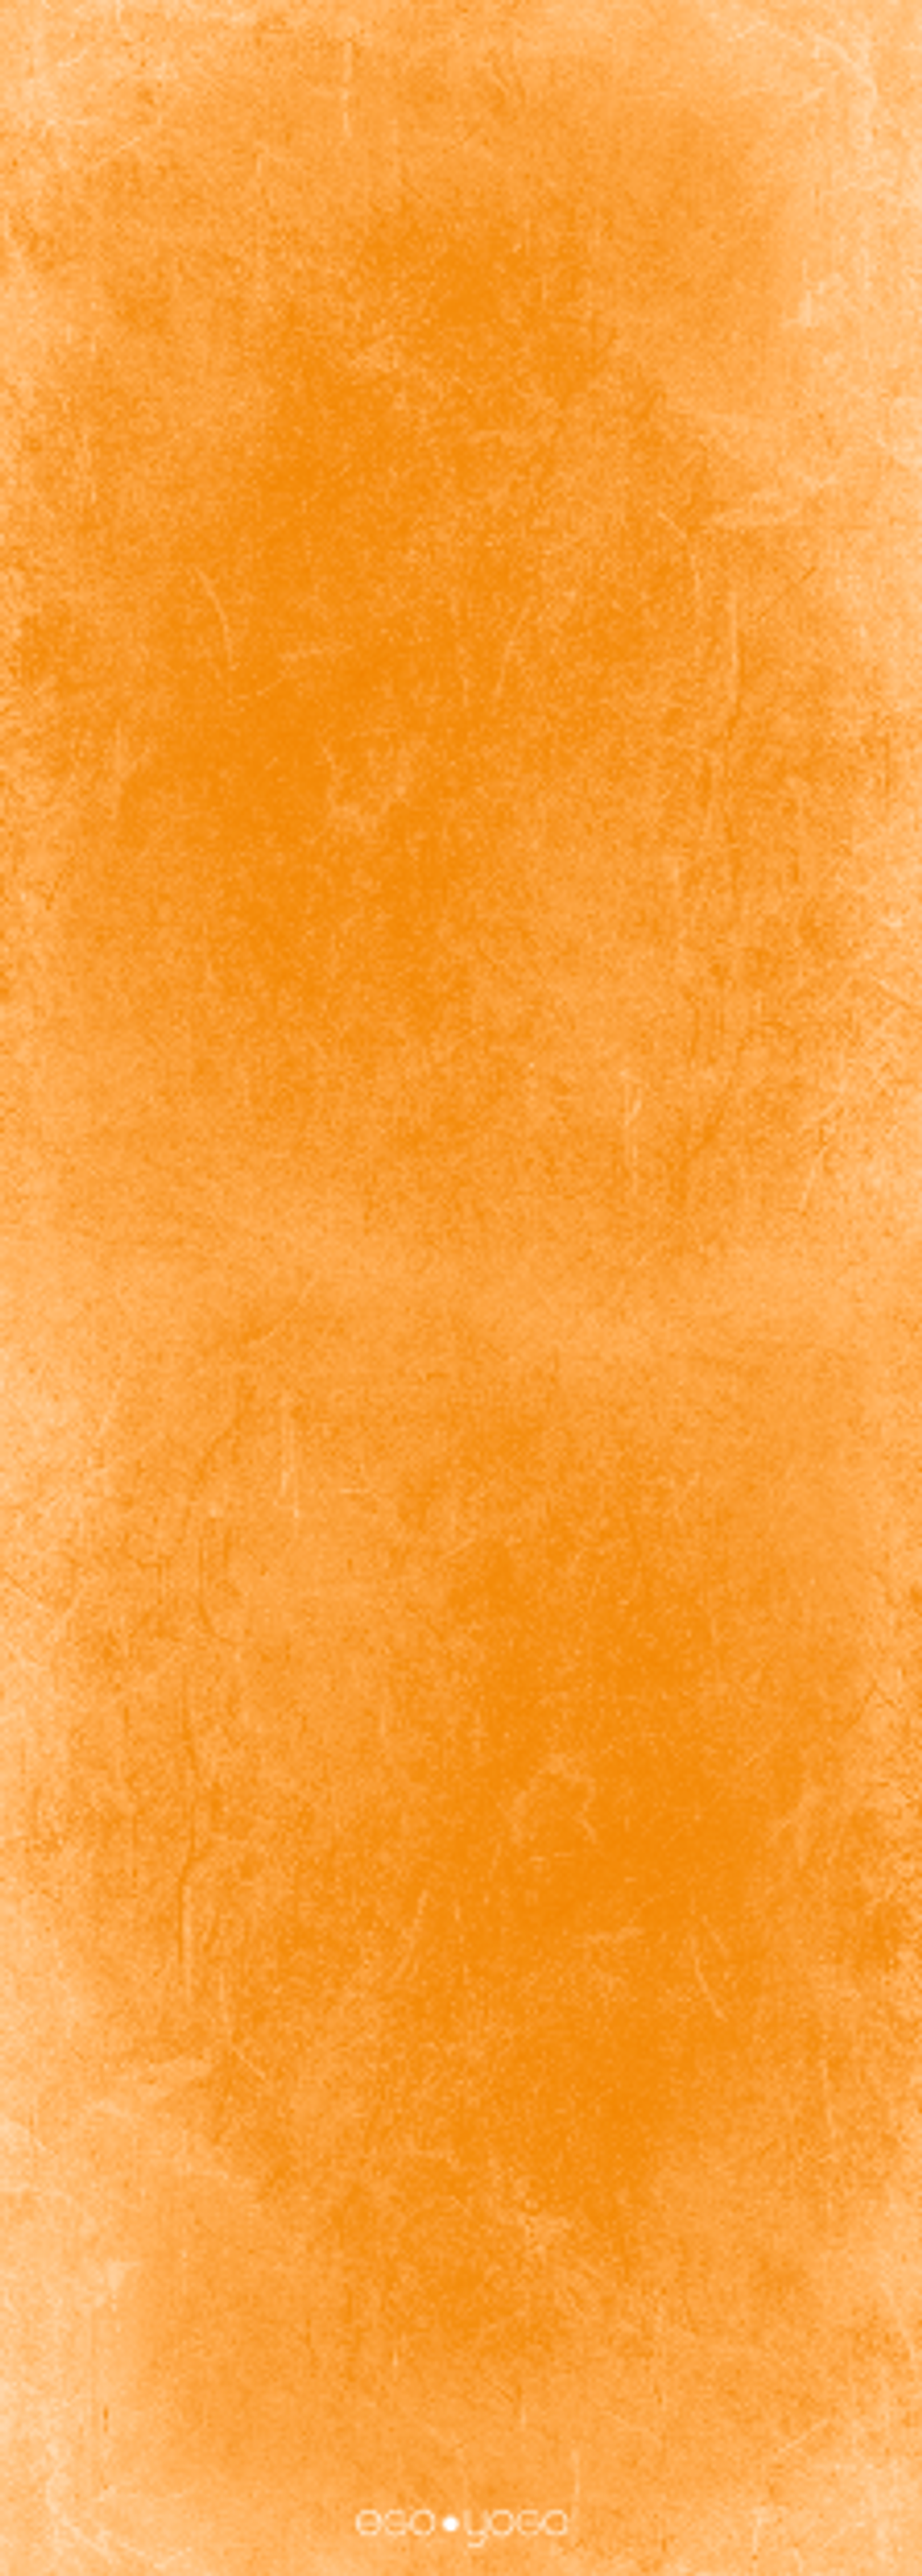 Коврик Orange из микрофибры и каучука 183*66*0,3 см